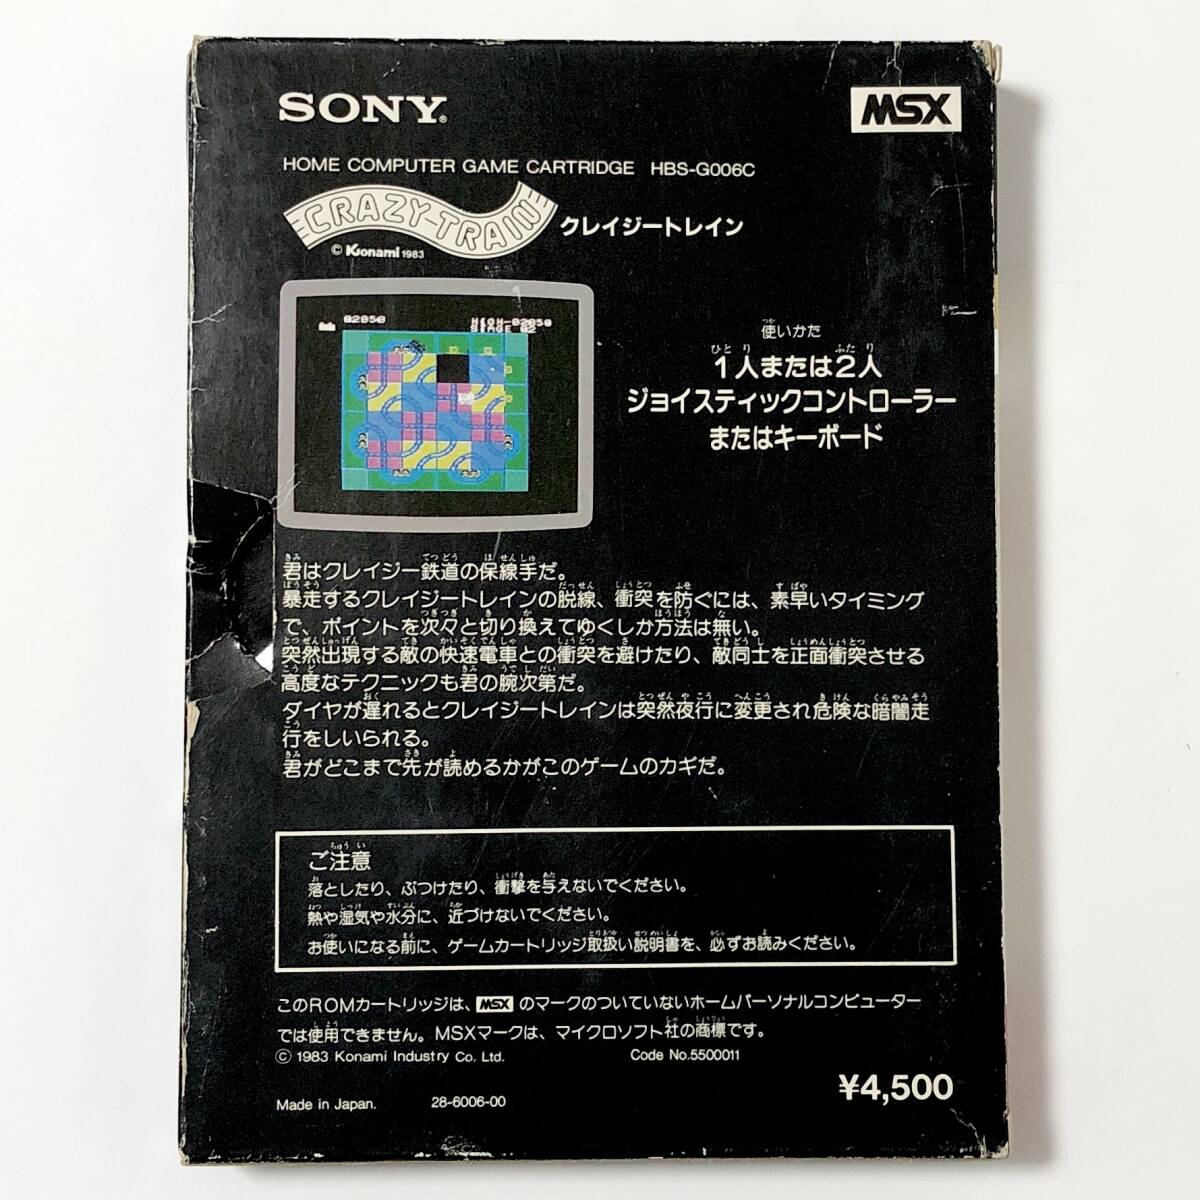 MSXk Lazy to rain instructions none pain equipped Sony Konami operation verification ending MSX Crazy Train No Manual Tested Sony Konami